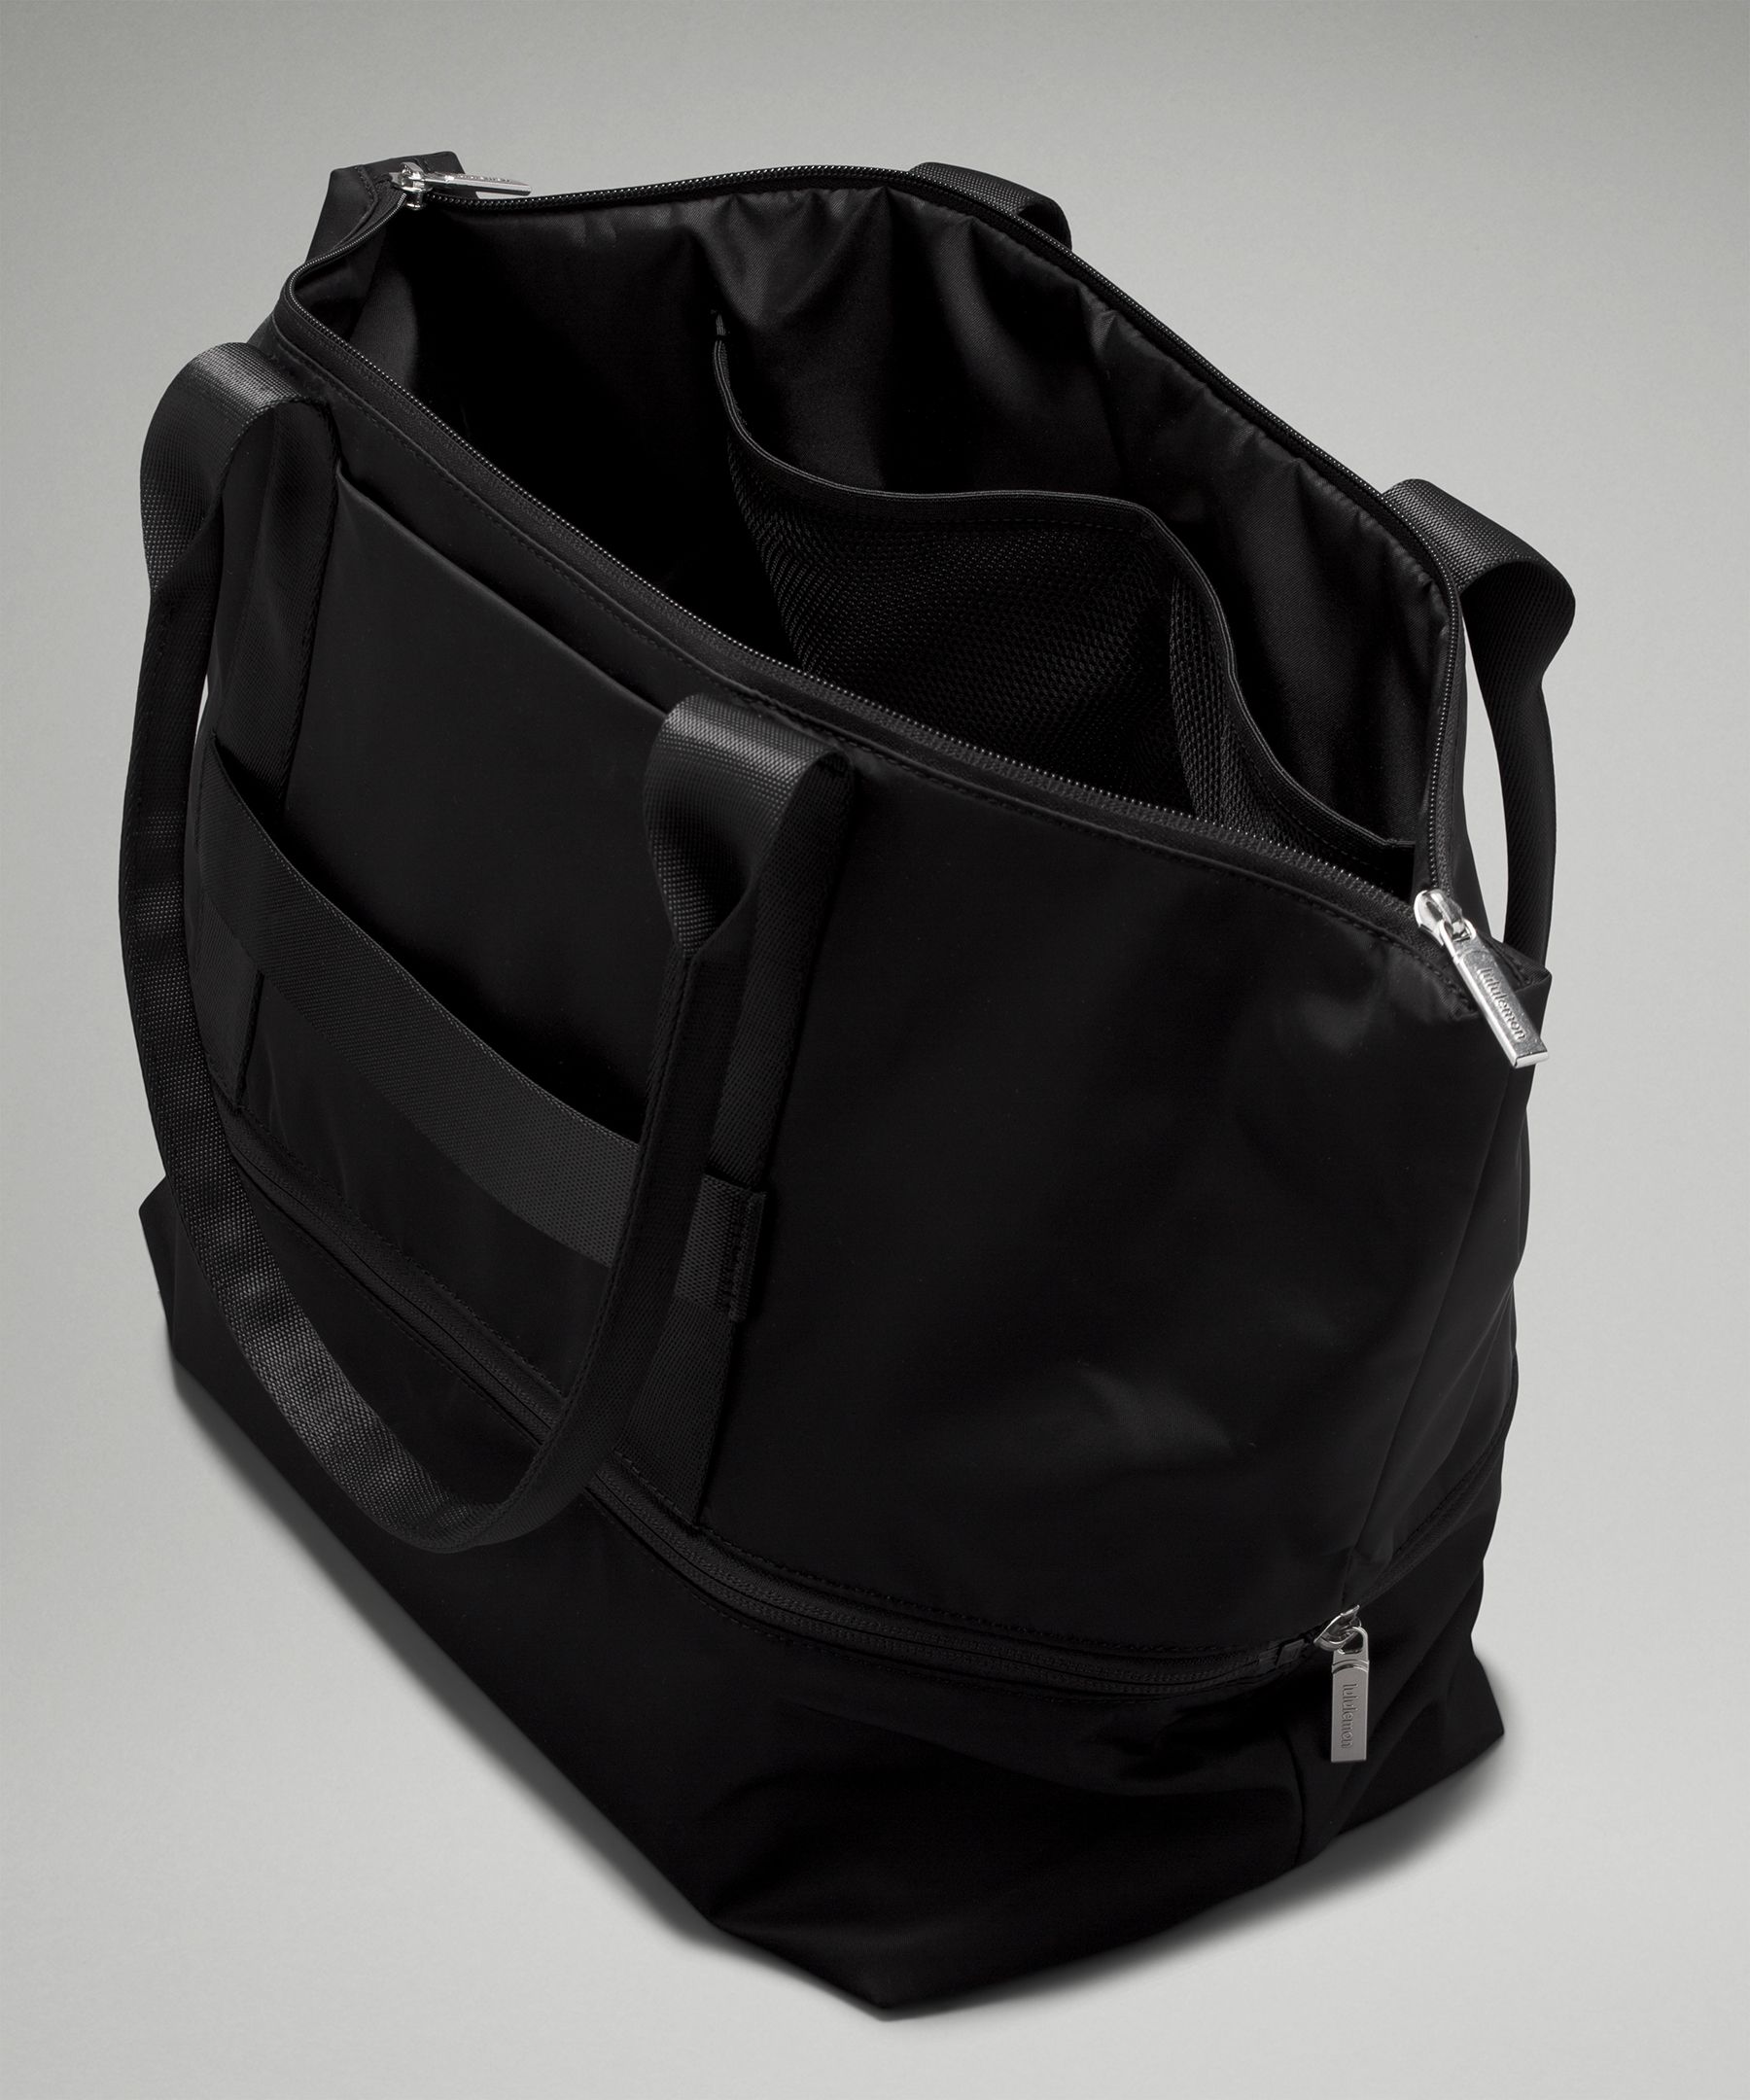 Lululemon Tote Black - Women's handbags